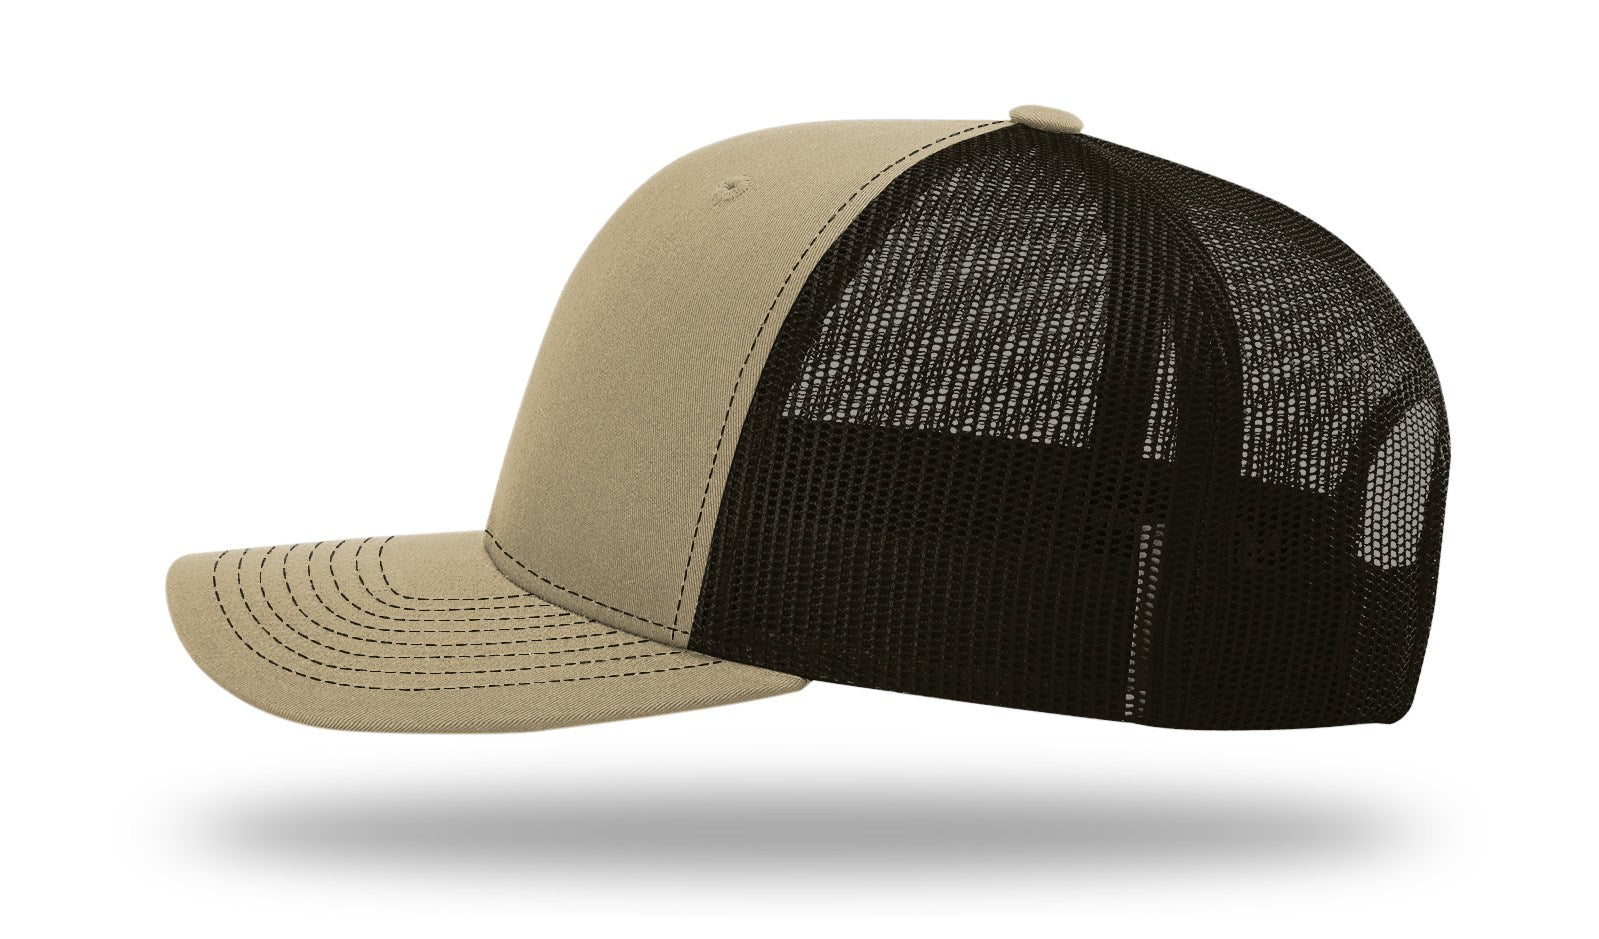 STLHD Steelhide Brown/Khaki Snapback Hat